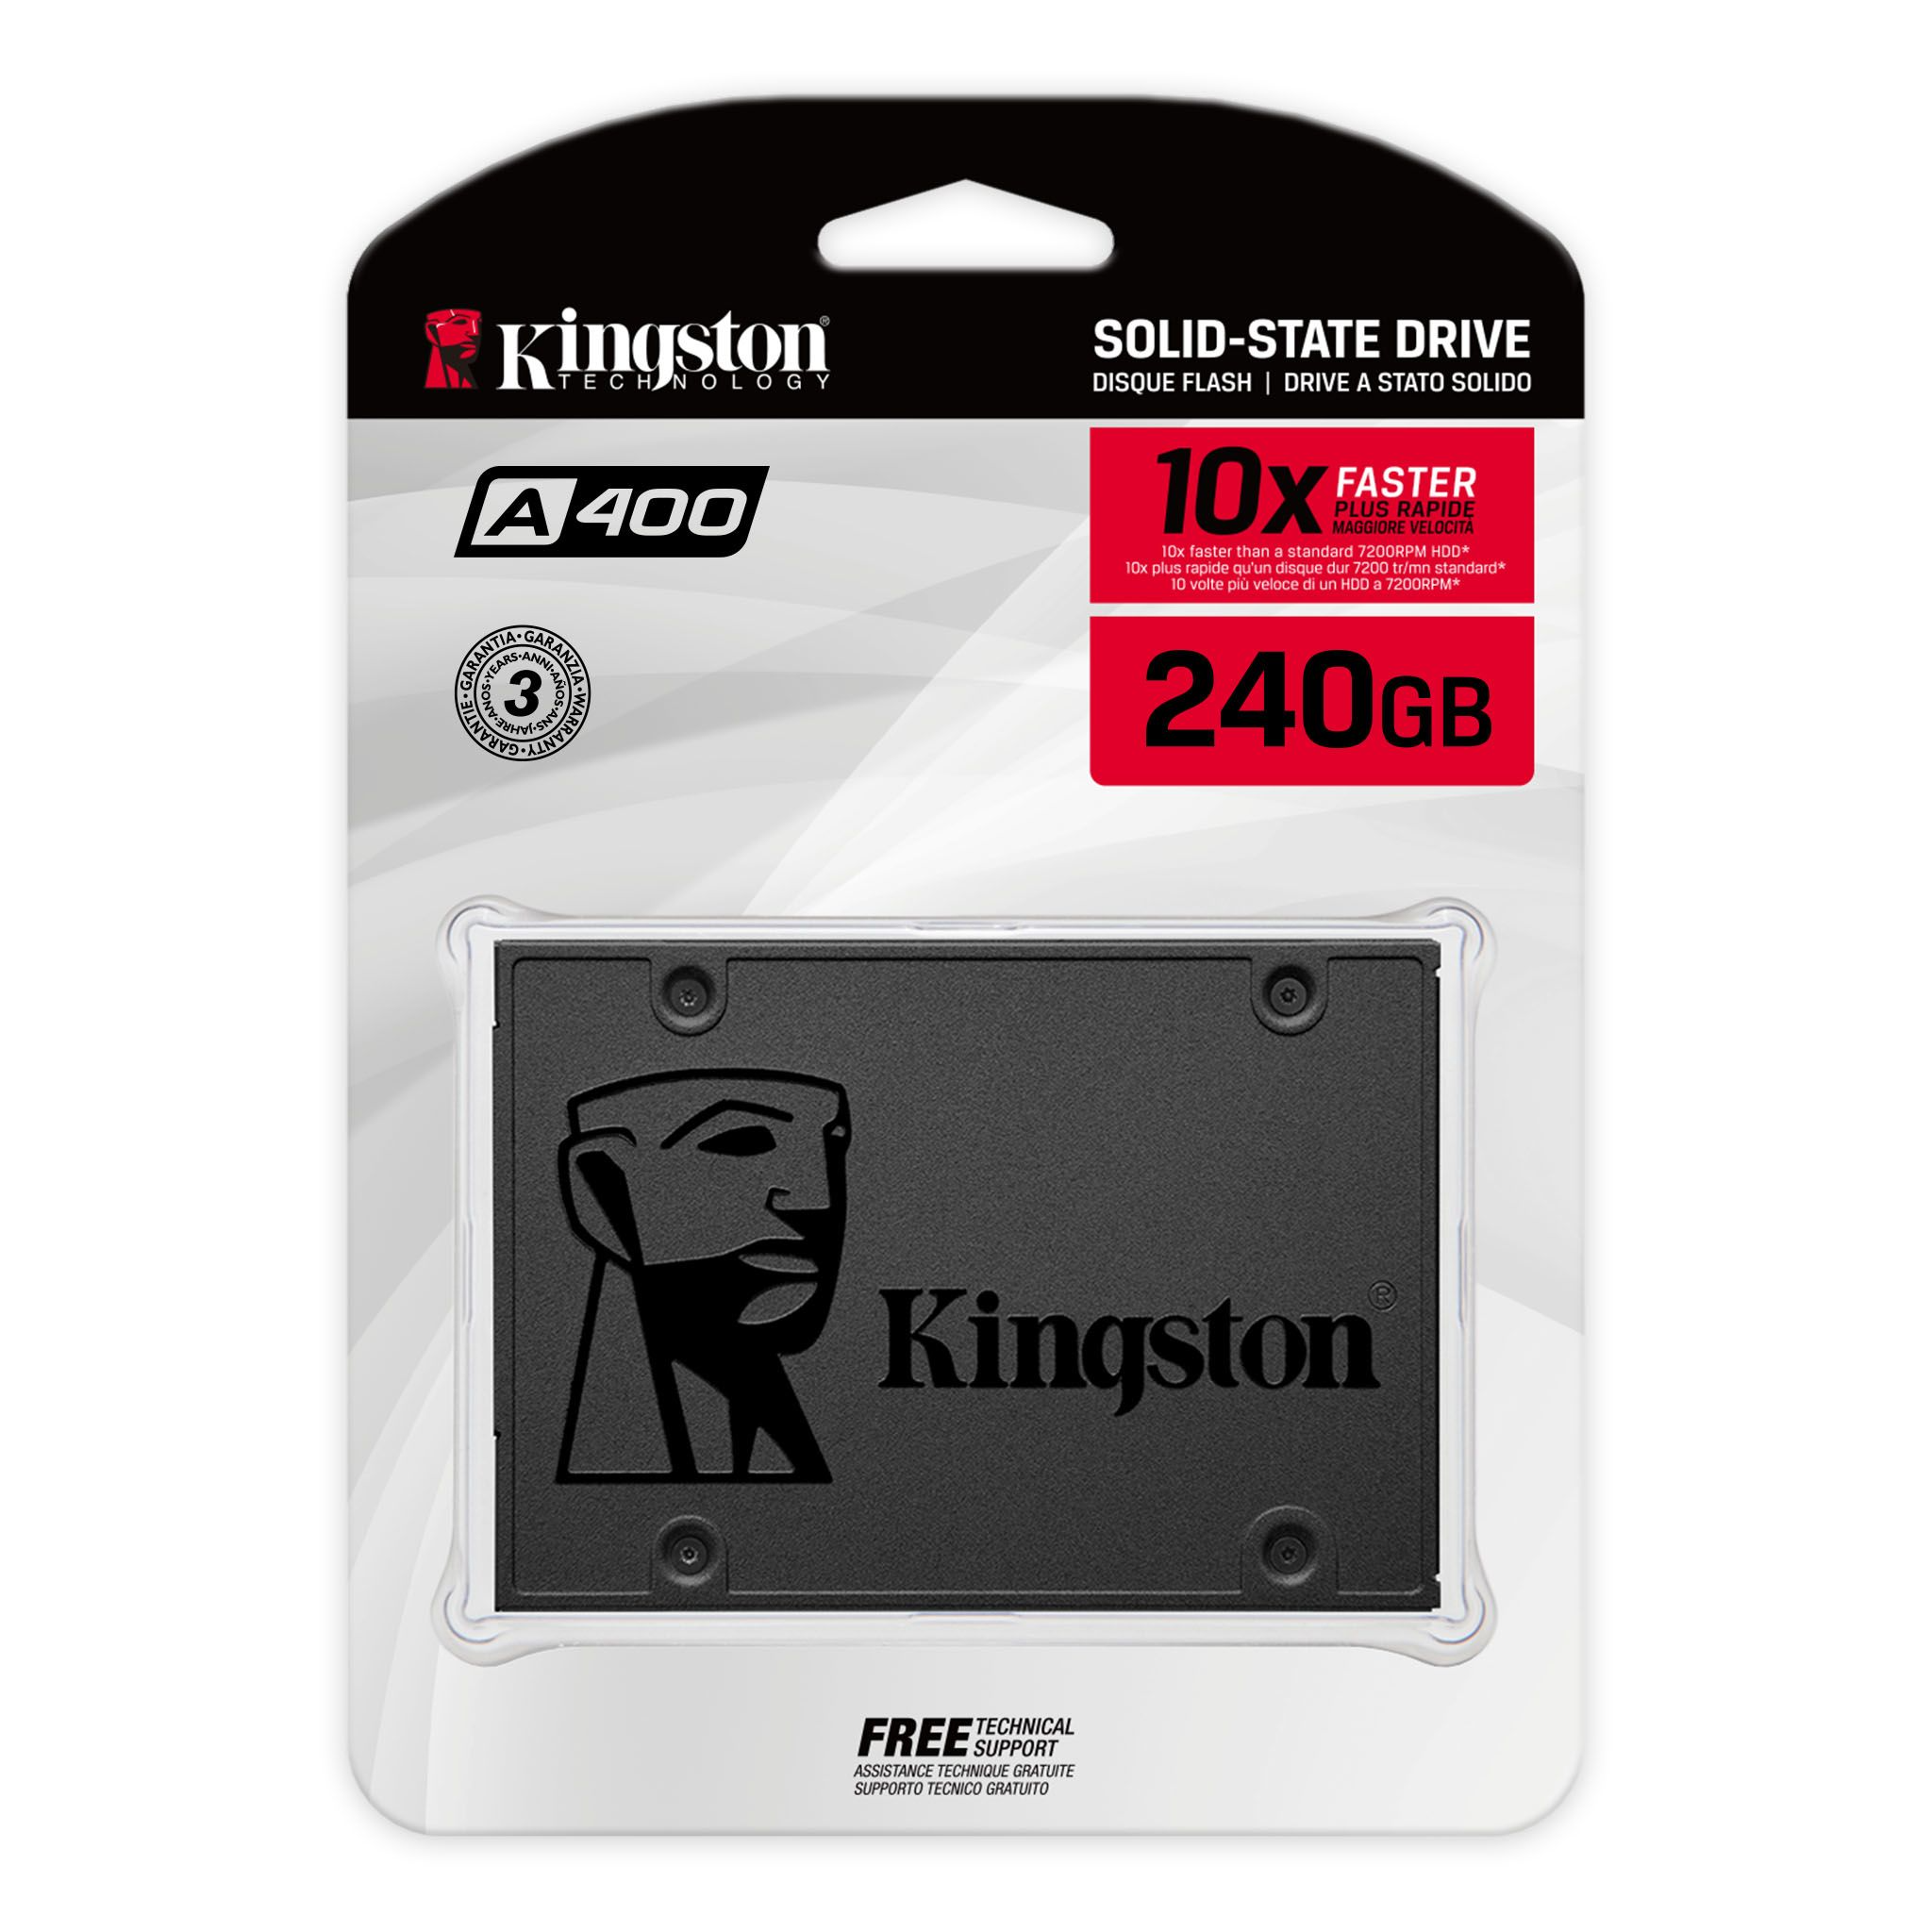  Ổ cứng SSD Kingston 240GB A400 SA400S37/240G (Sata 3 2.5